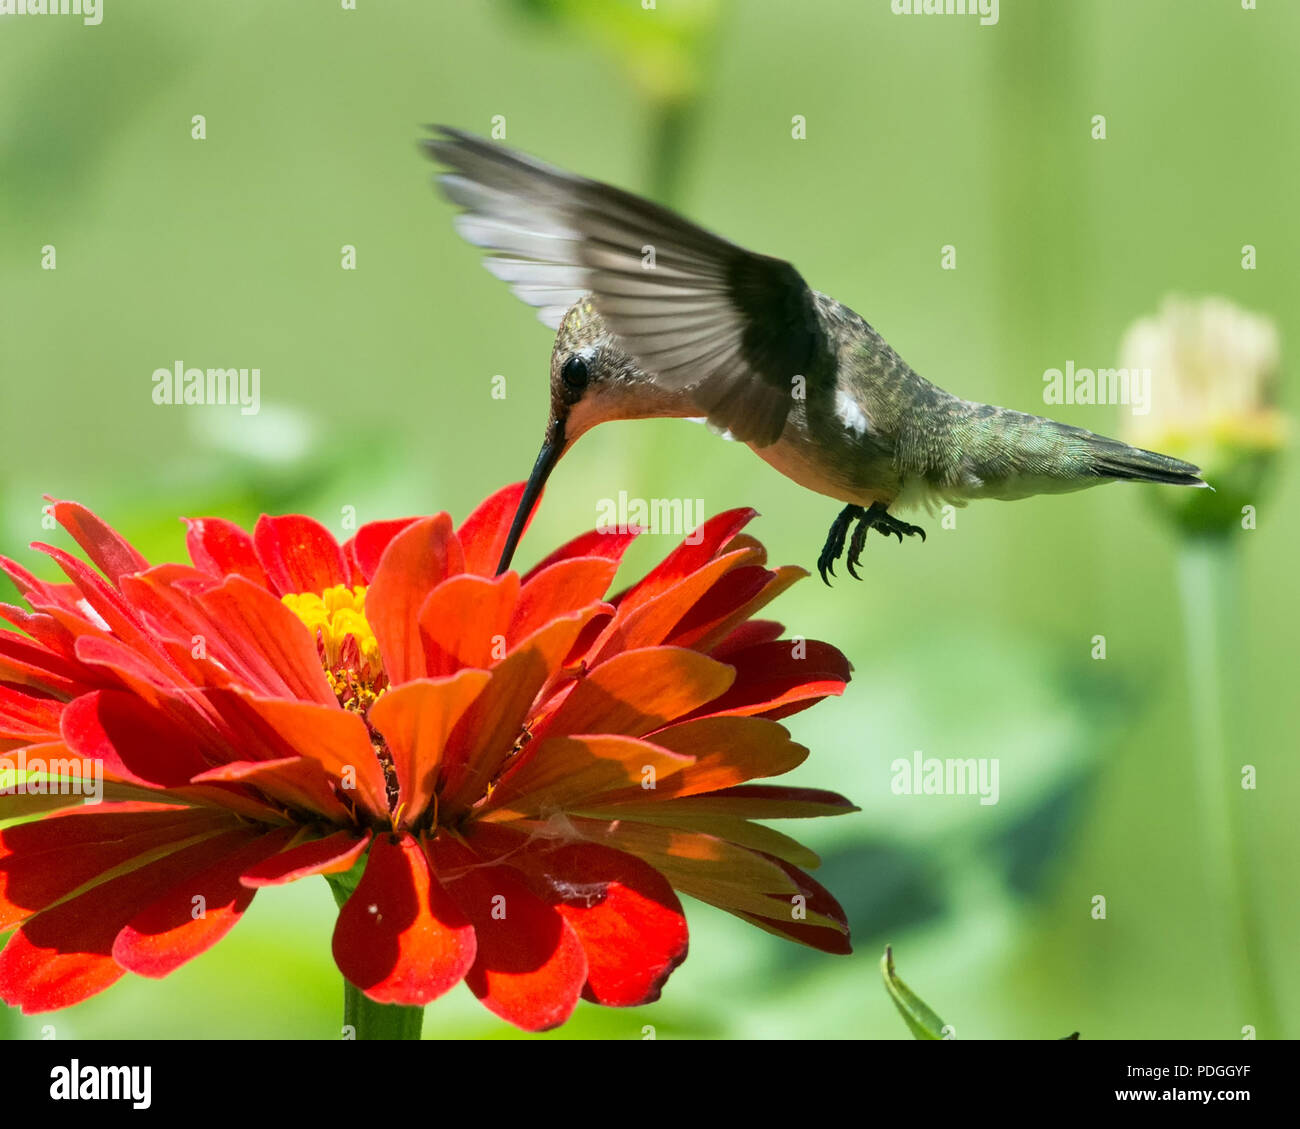 Closeup of Hummingbird Feeding on Red Zinnia Flower Stock Photo